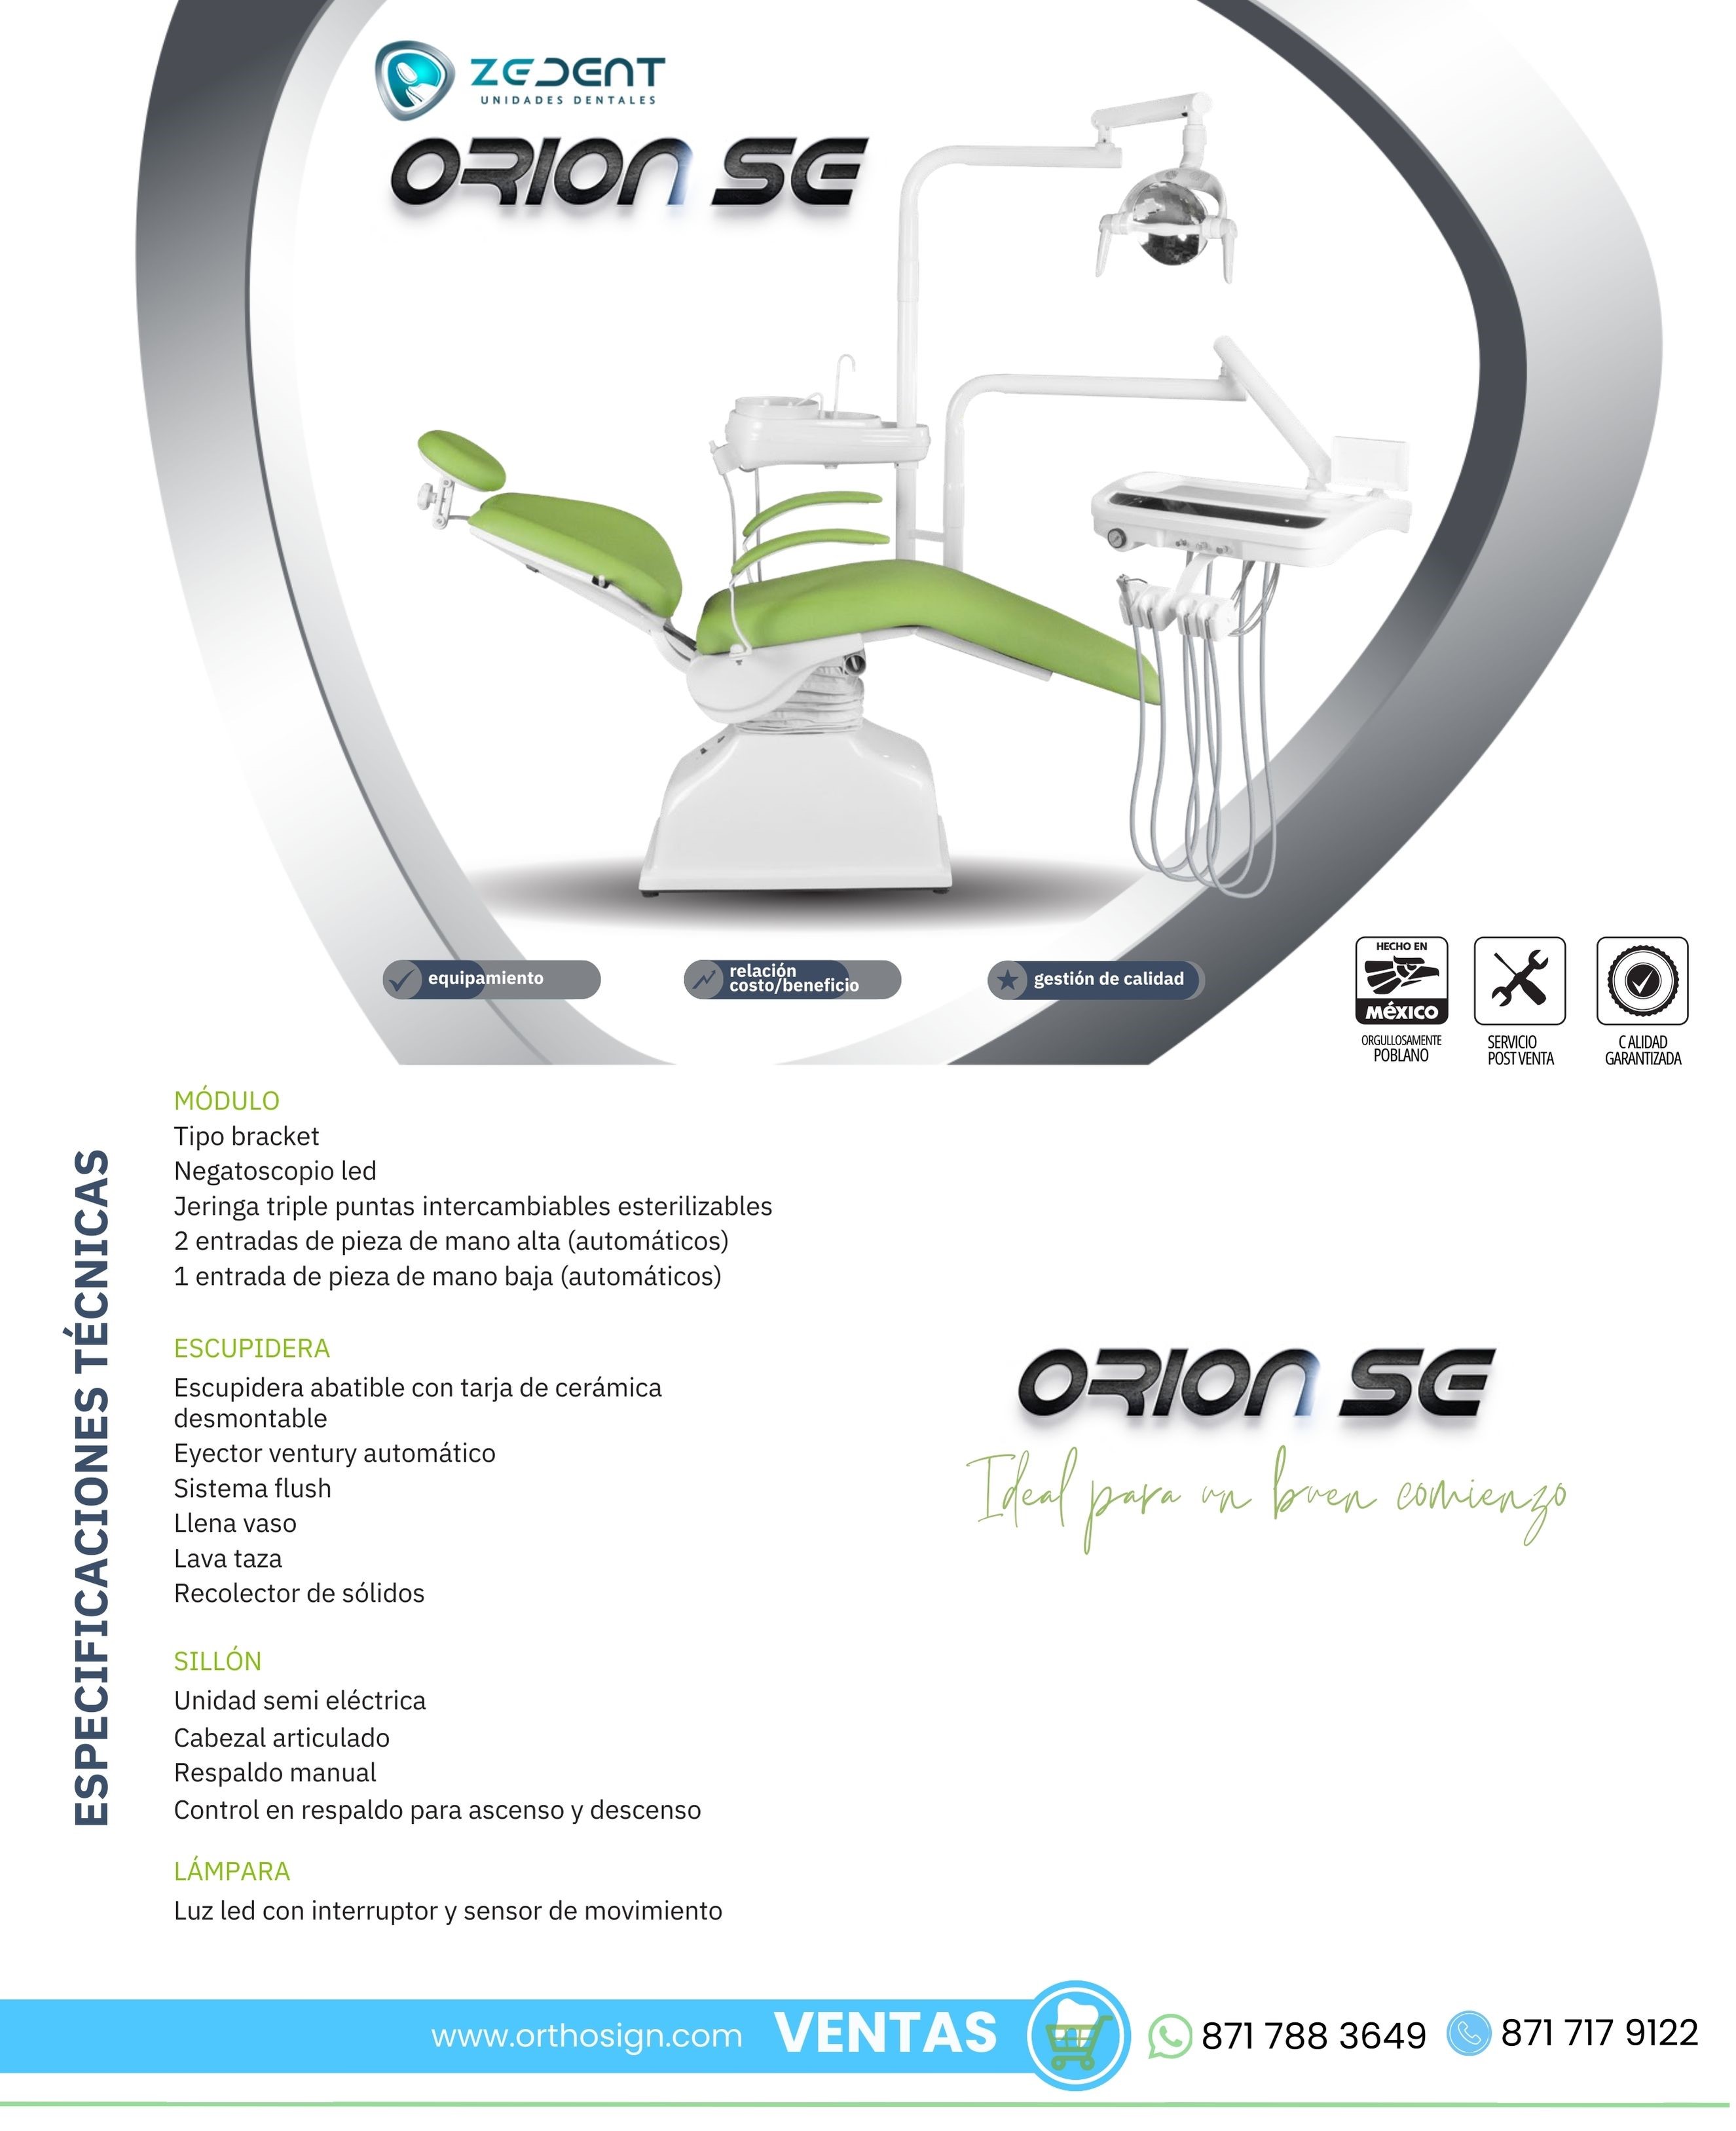 Unidad Dental Semieléctrica Orion SE - ZedentCatálogo  Productos Orthosign